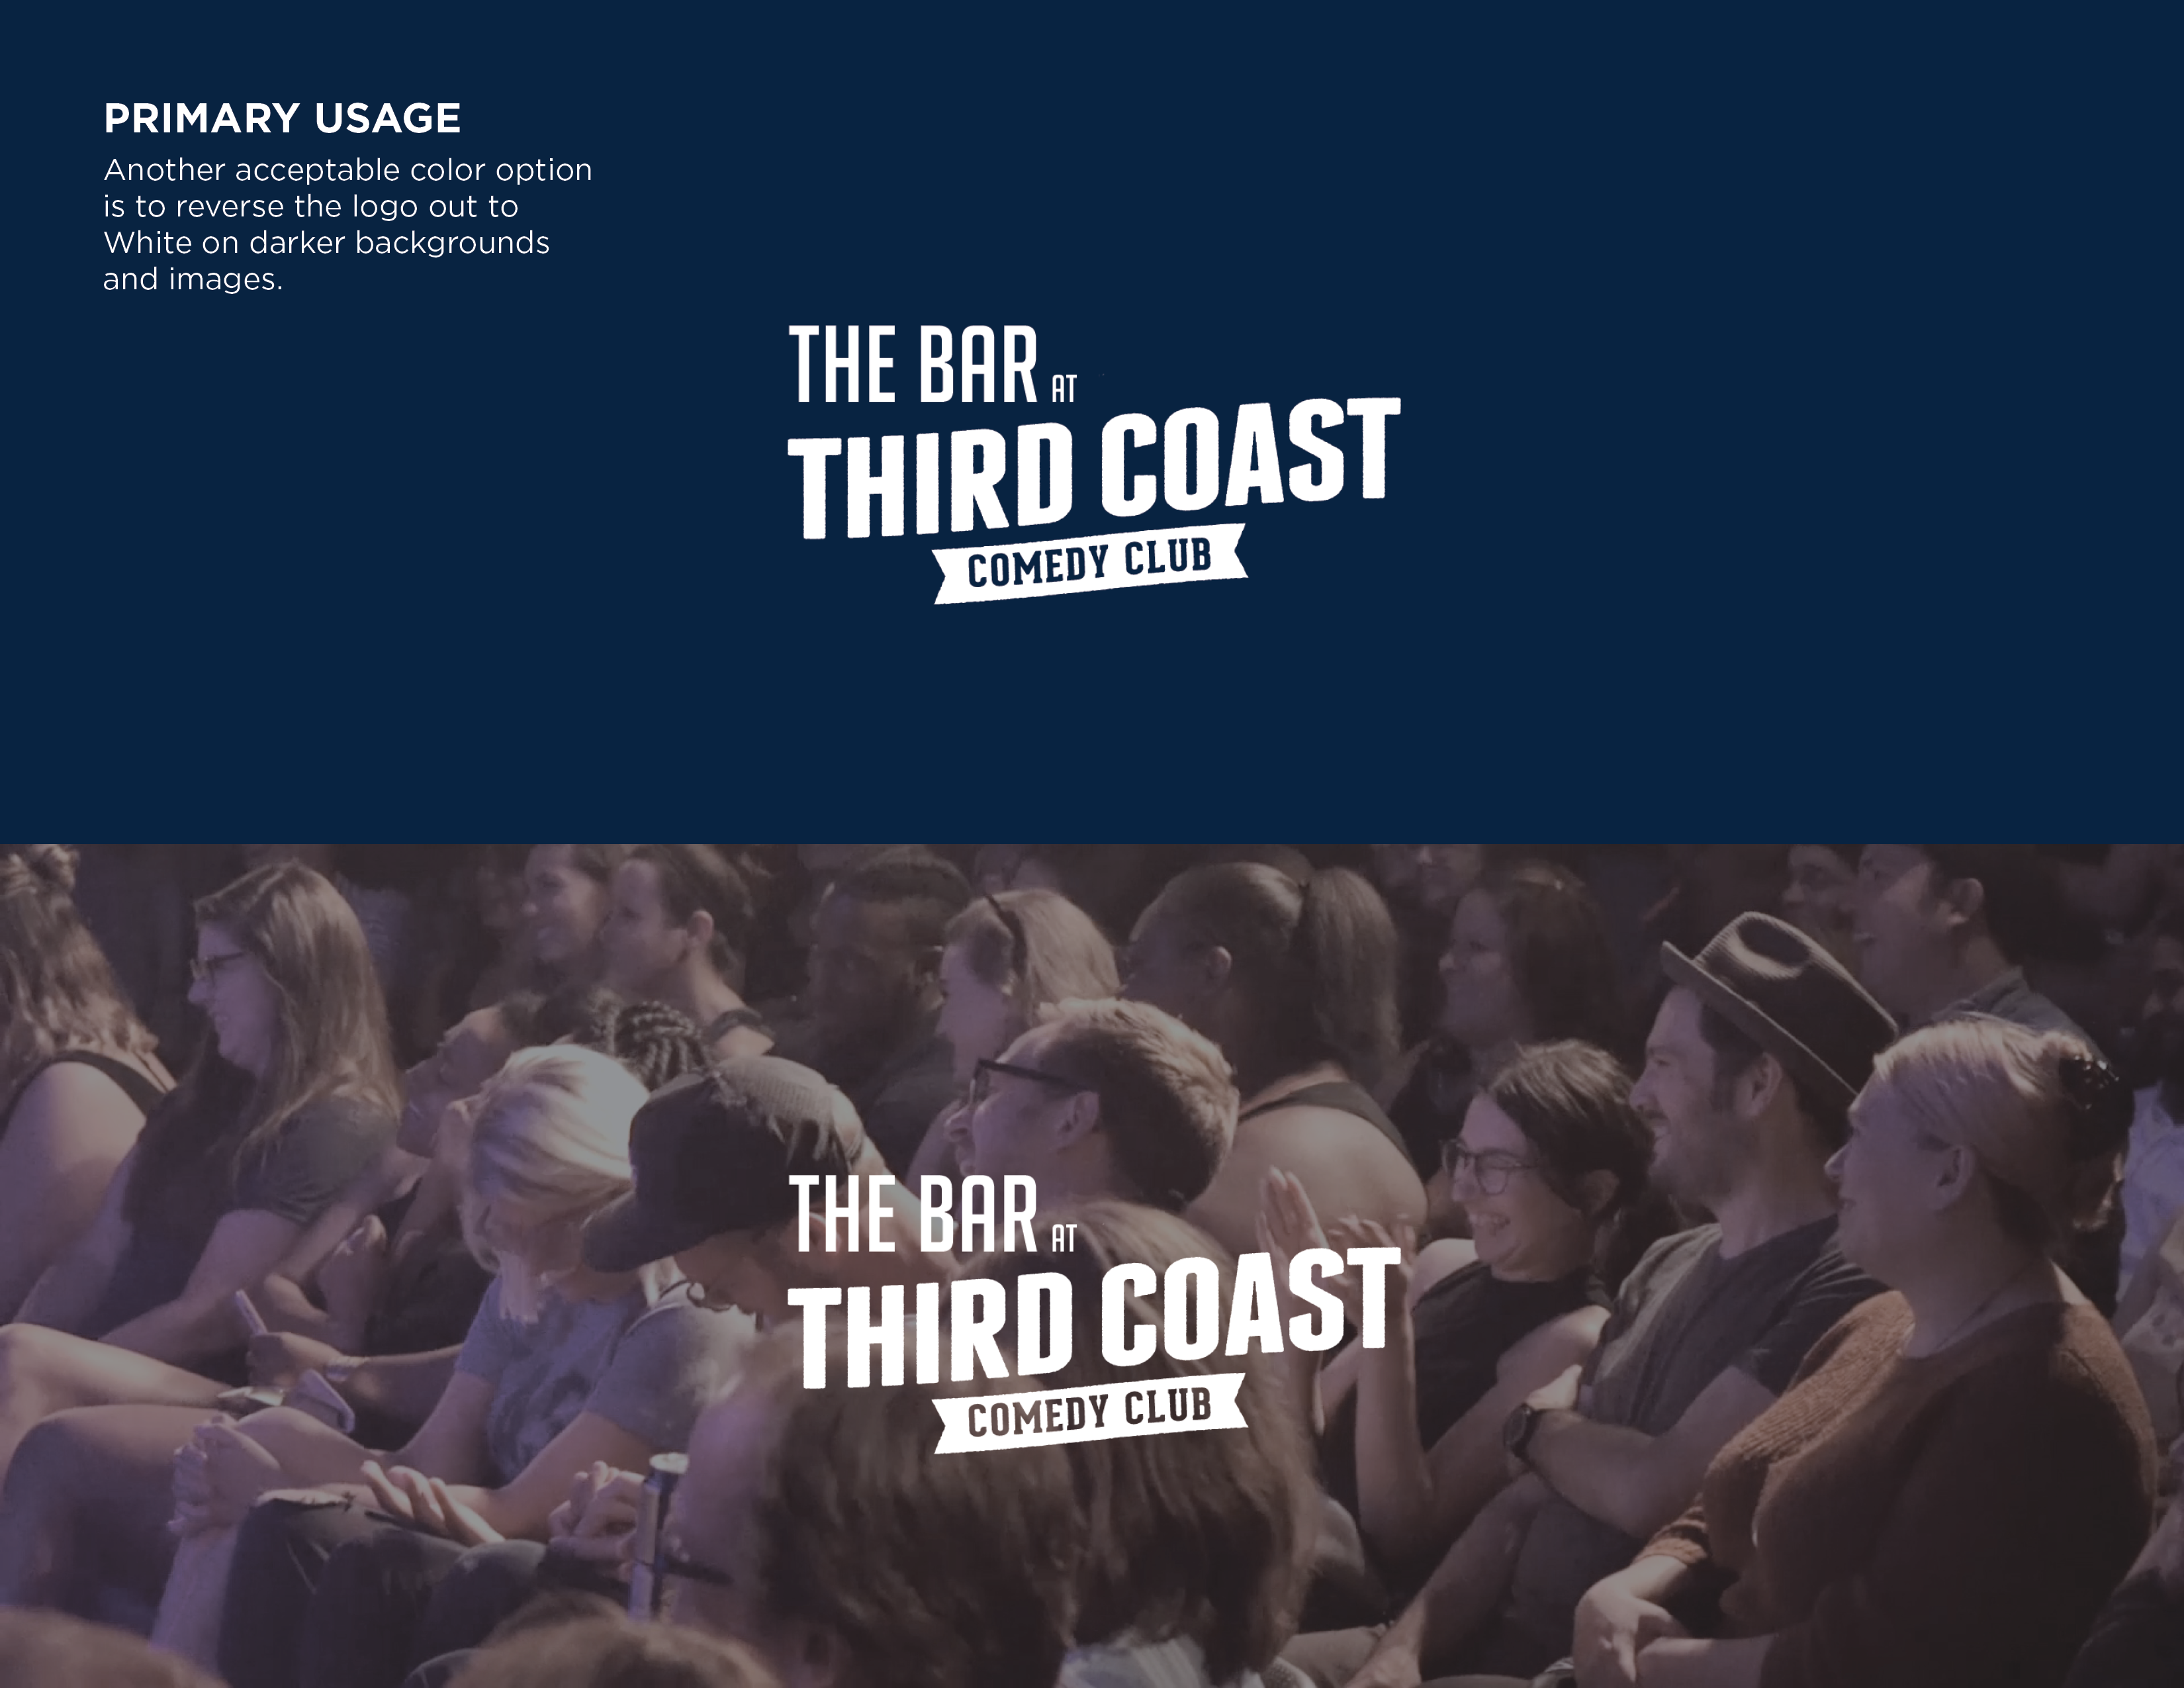 Third Coast Brand Guidelines 202310